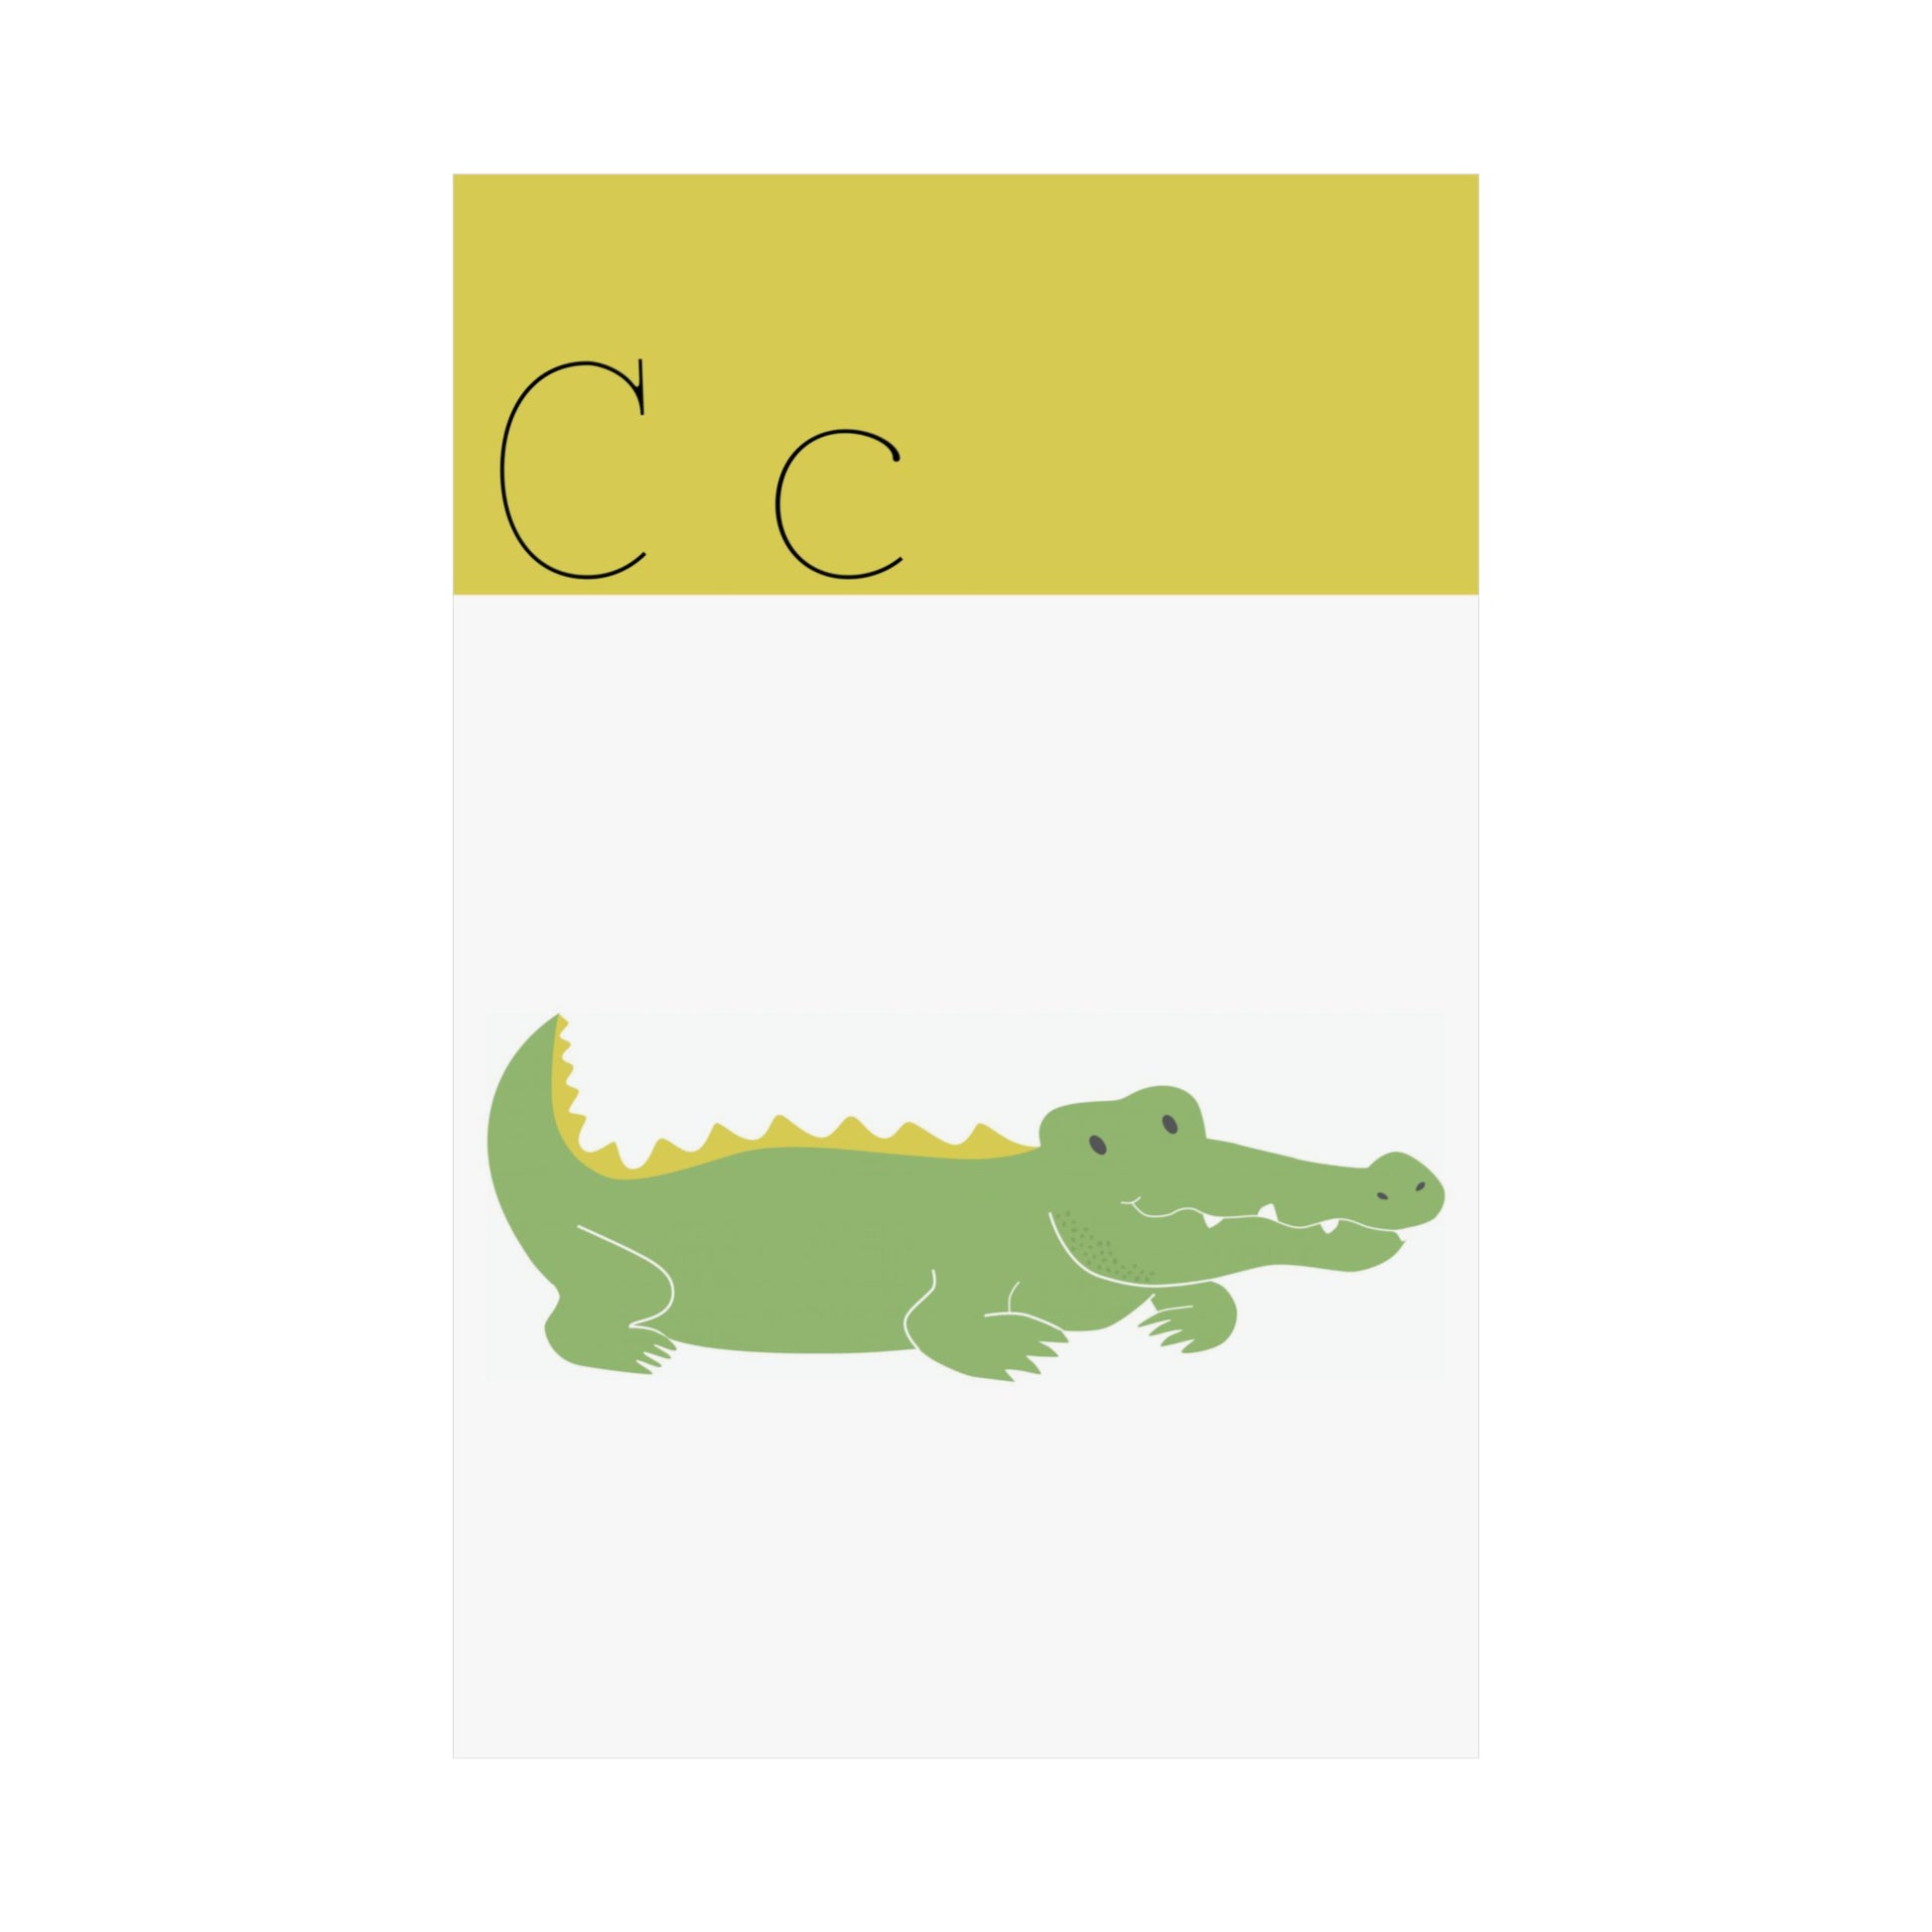 Crocodile Poster in white background 